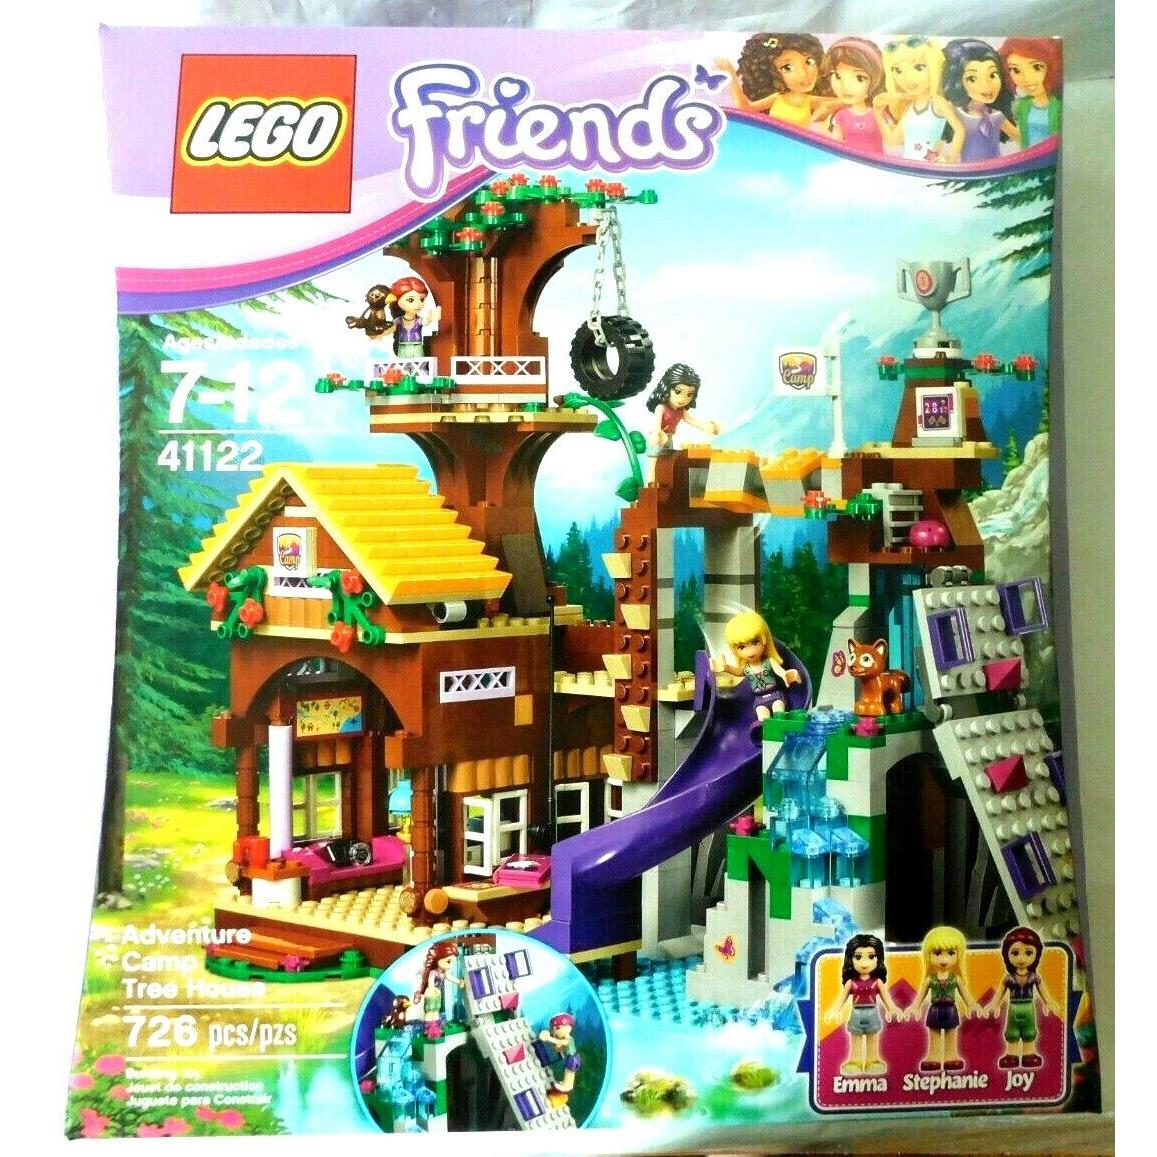 Lego 41122 Friends Adventure Camp Tree House Box Retired